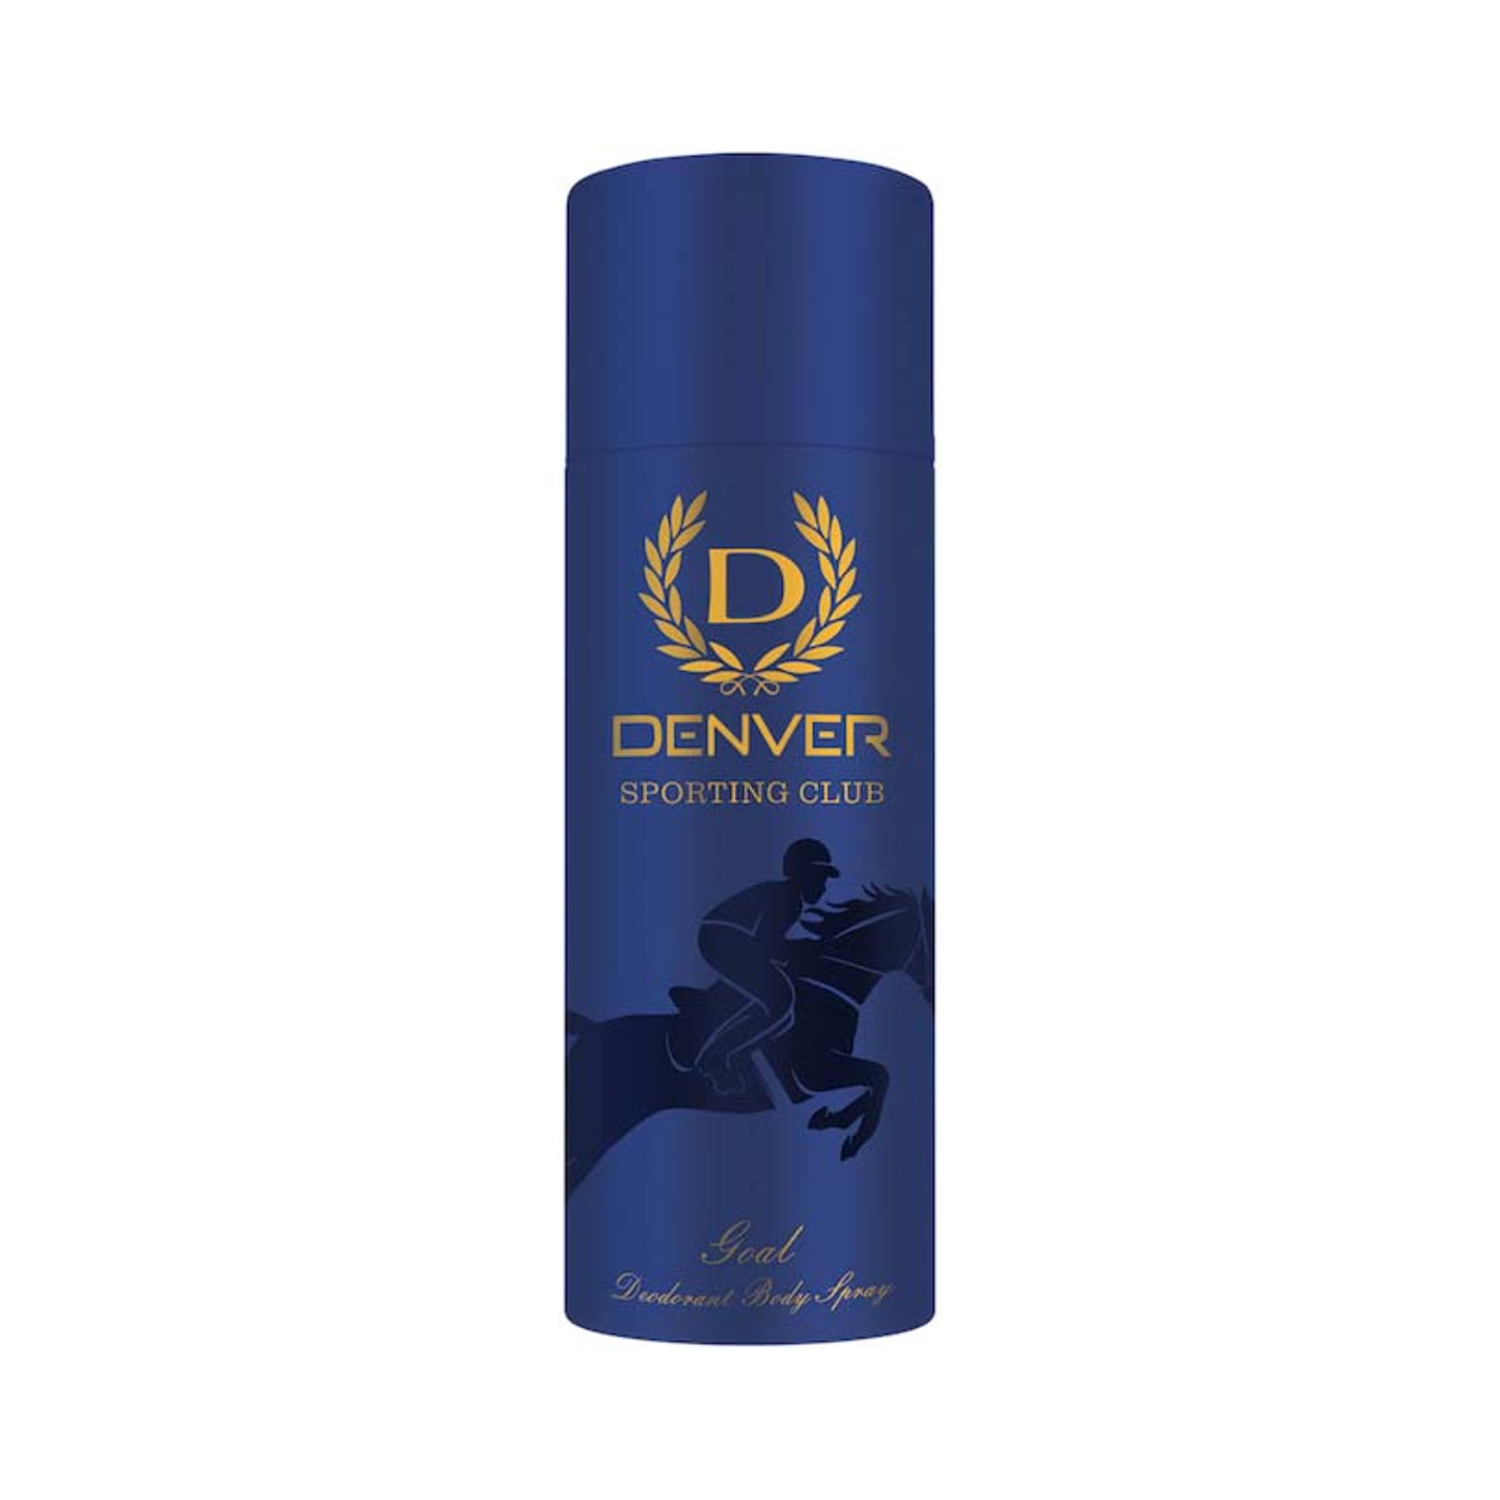 Denver | Denver Sporting Club Goal Deodorant Body Spray for Men (200ml)